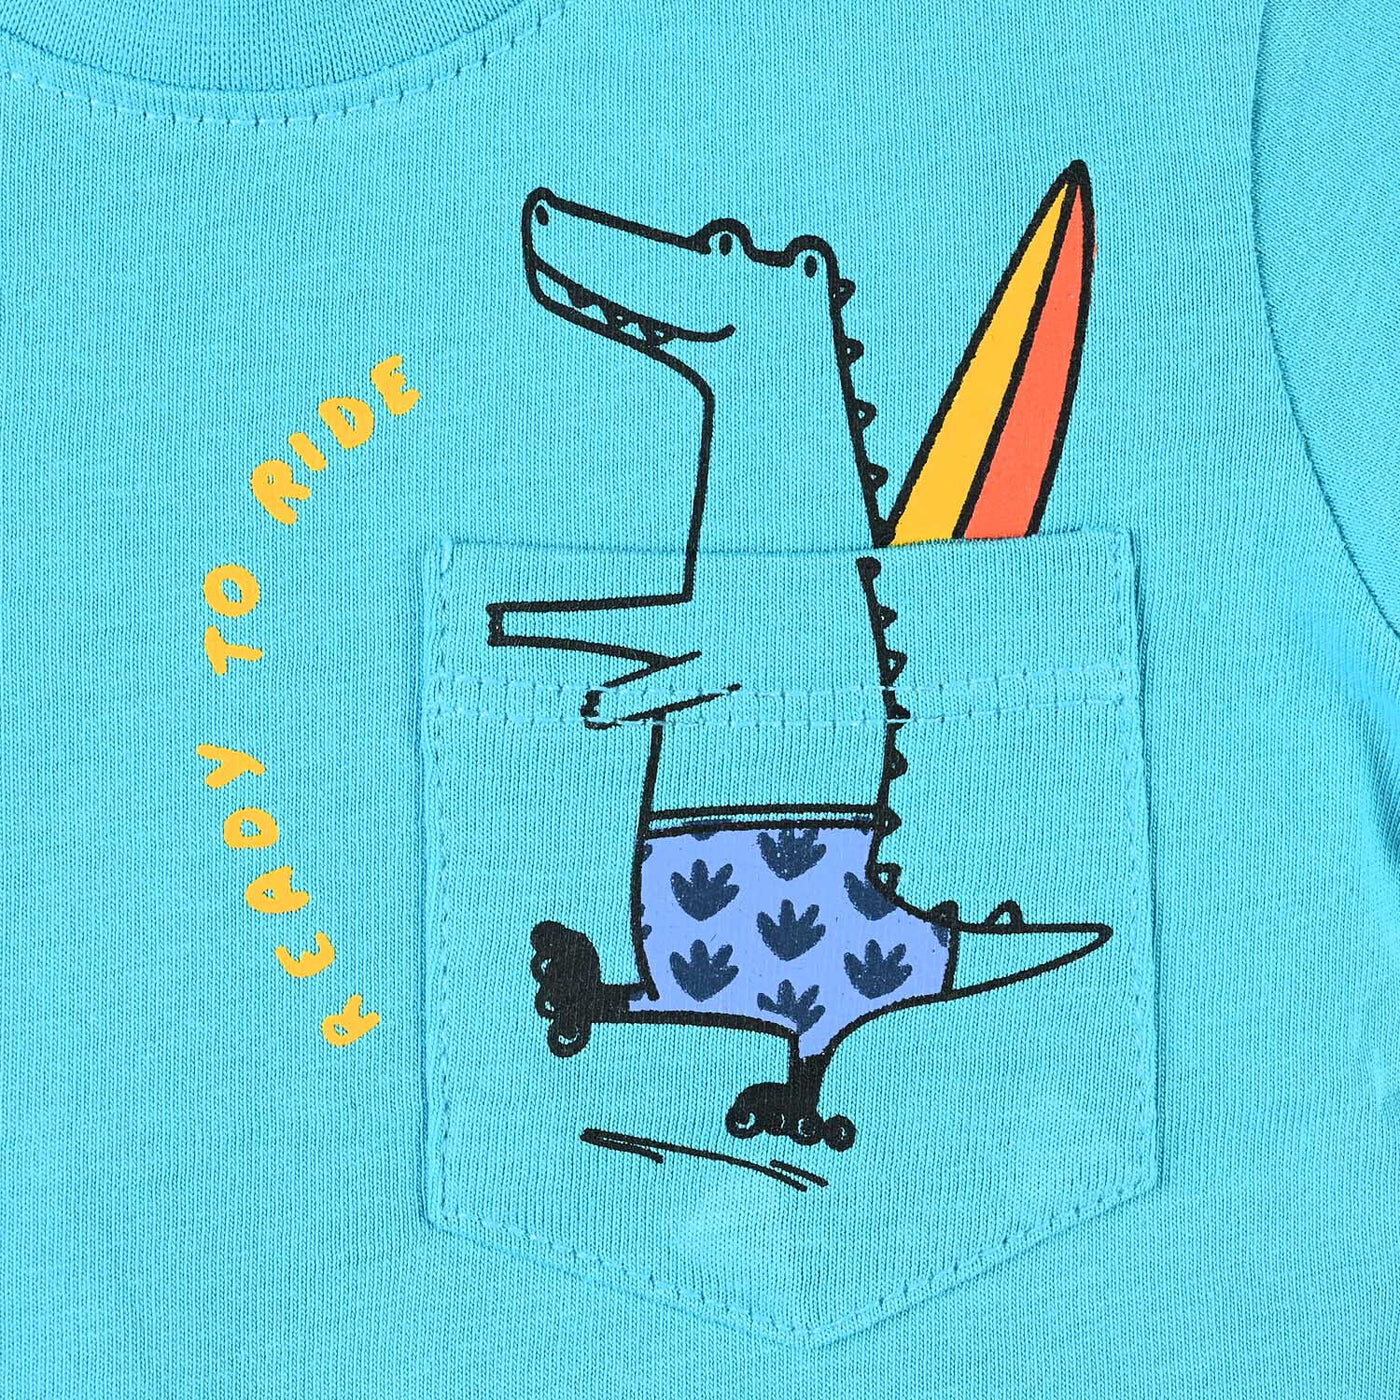 Infant Boys Slub Jersey T-Shirt Ready To Ride-Capri